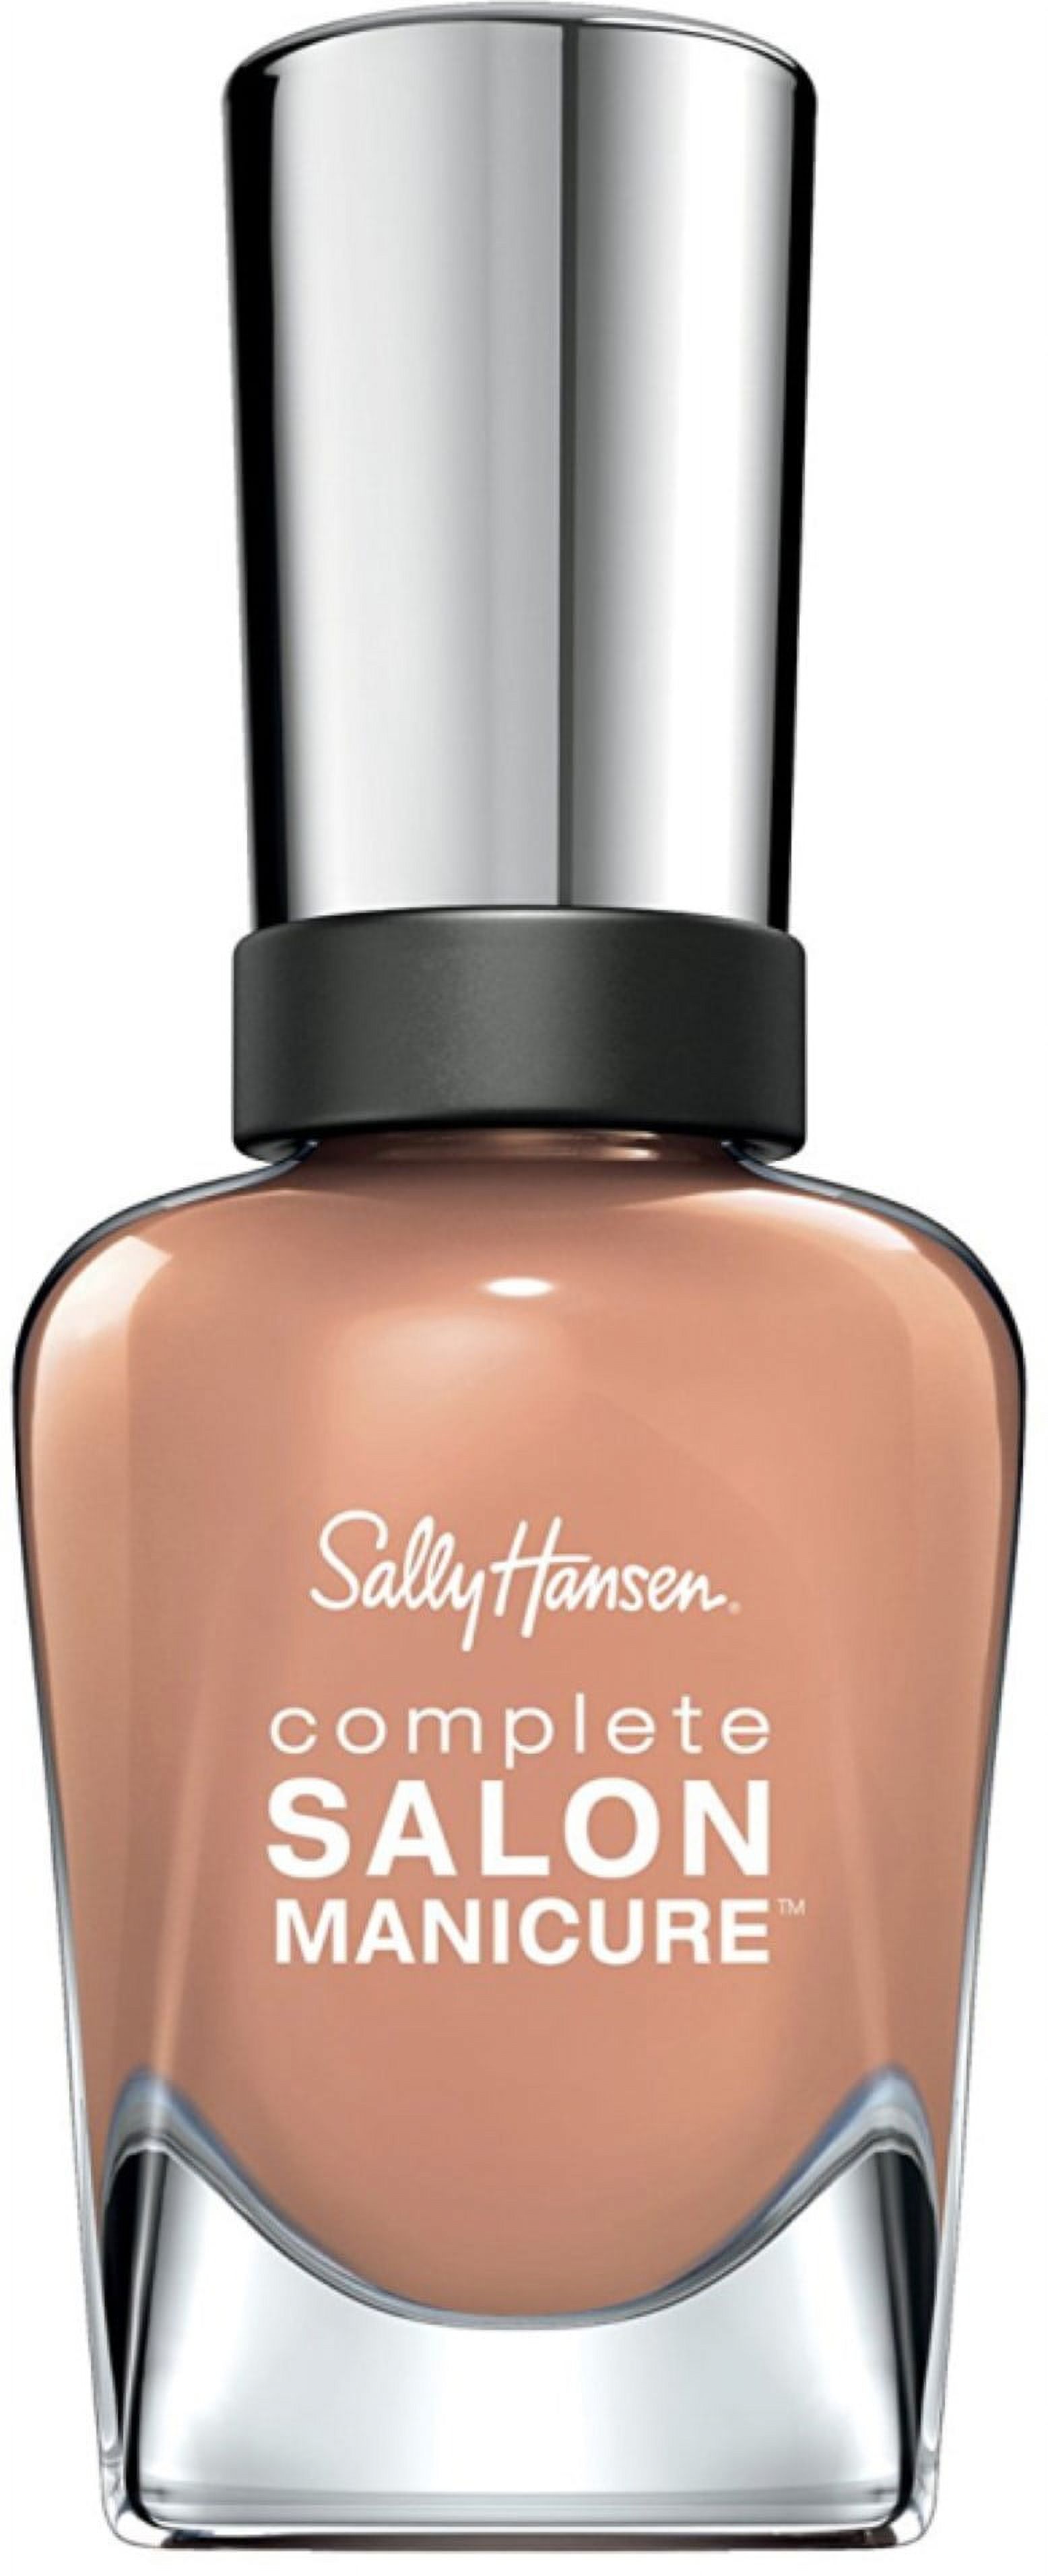 Sally Hansen Complete Salon Manicure Nail Polish, 0.5 fl oz - image 1 of 3